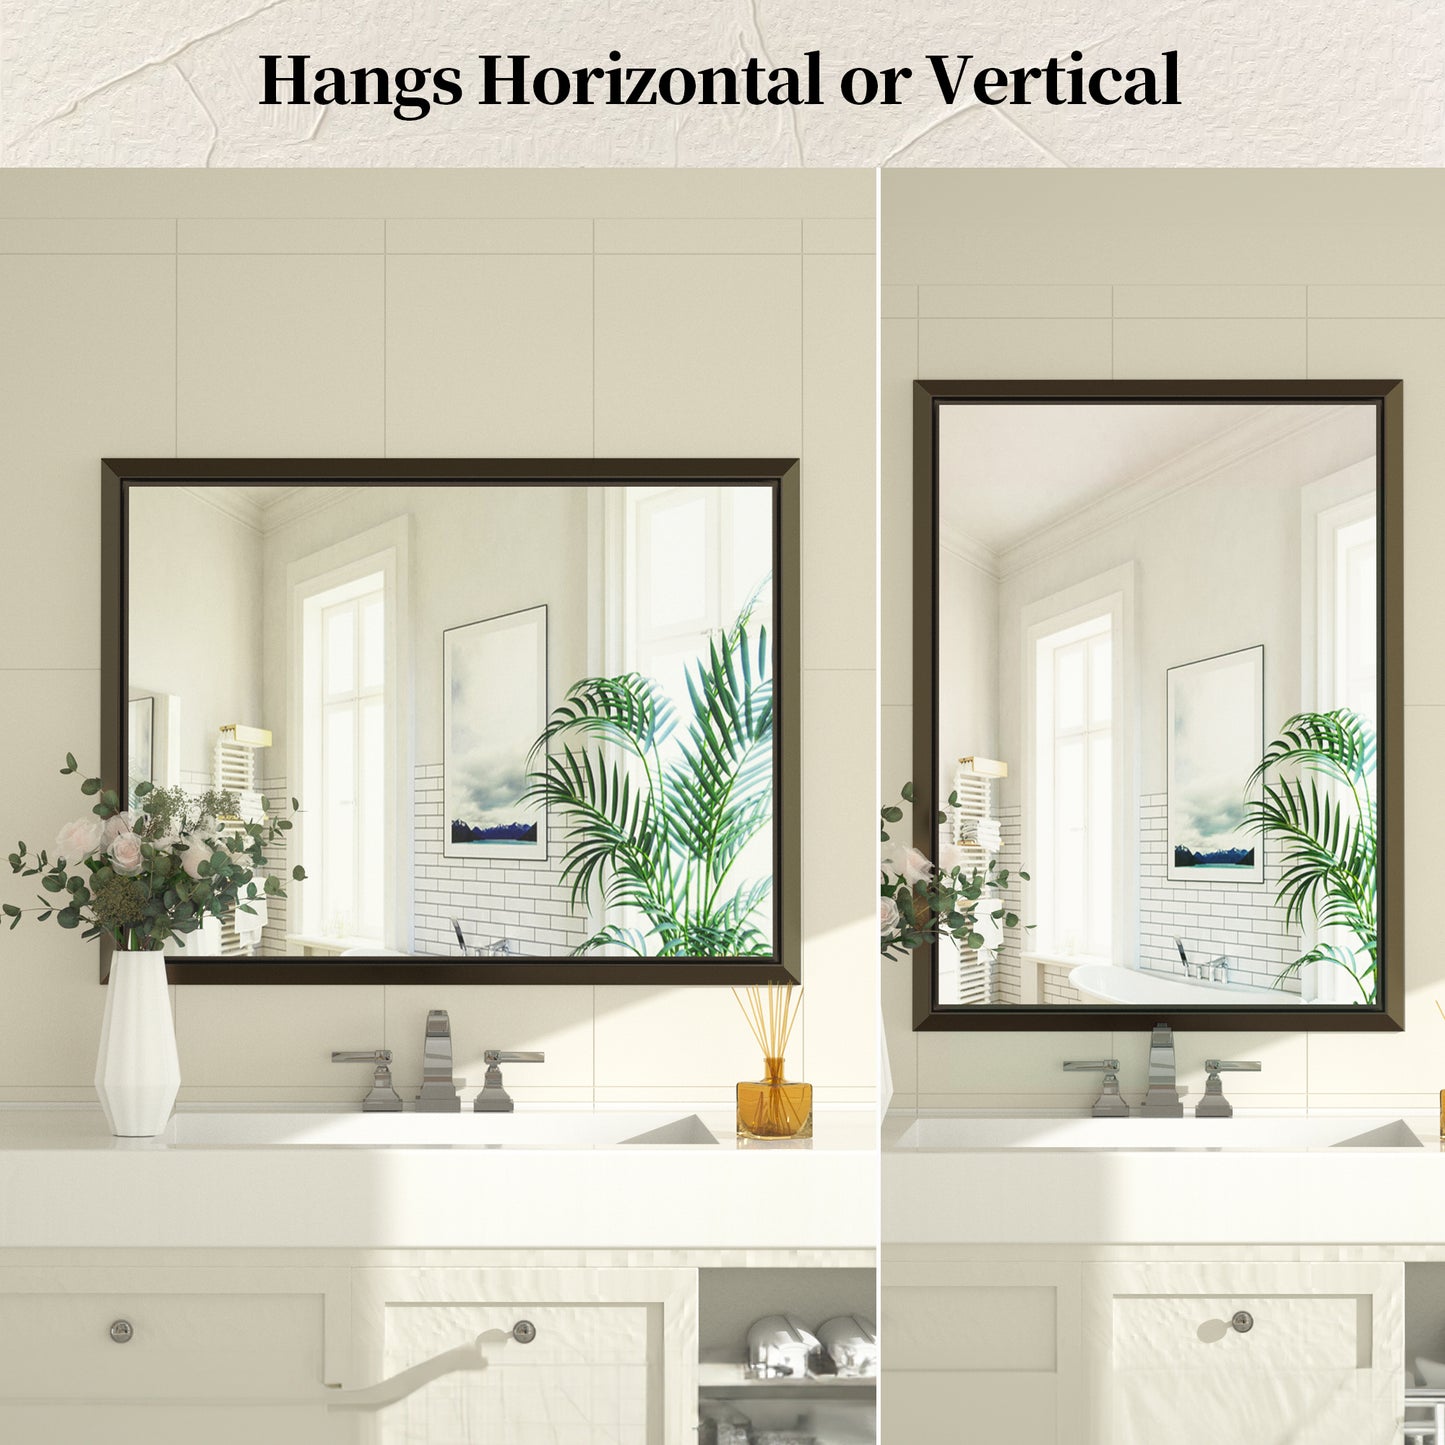 
                  
                    40 x 30 Inch | PILOCOS Modern Rustic Rectangular Beveled Frame Bathroom Vanity Mirror
                  
                